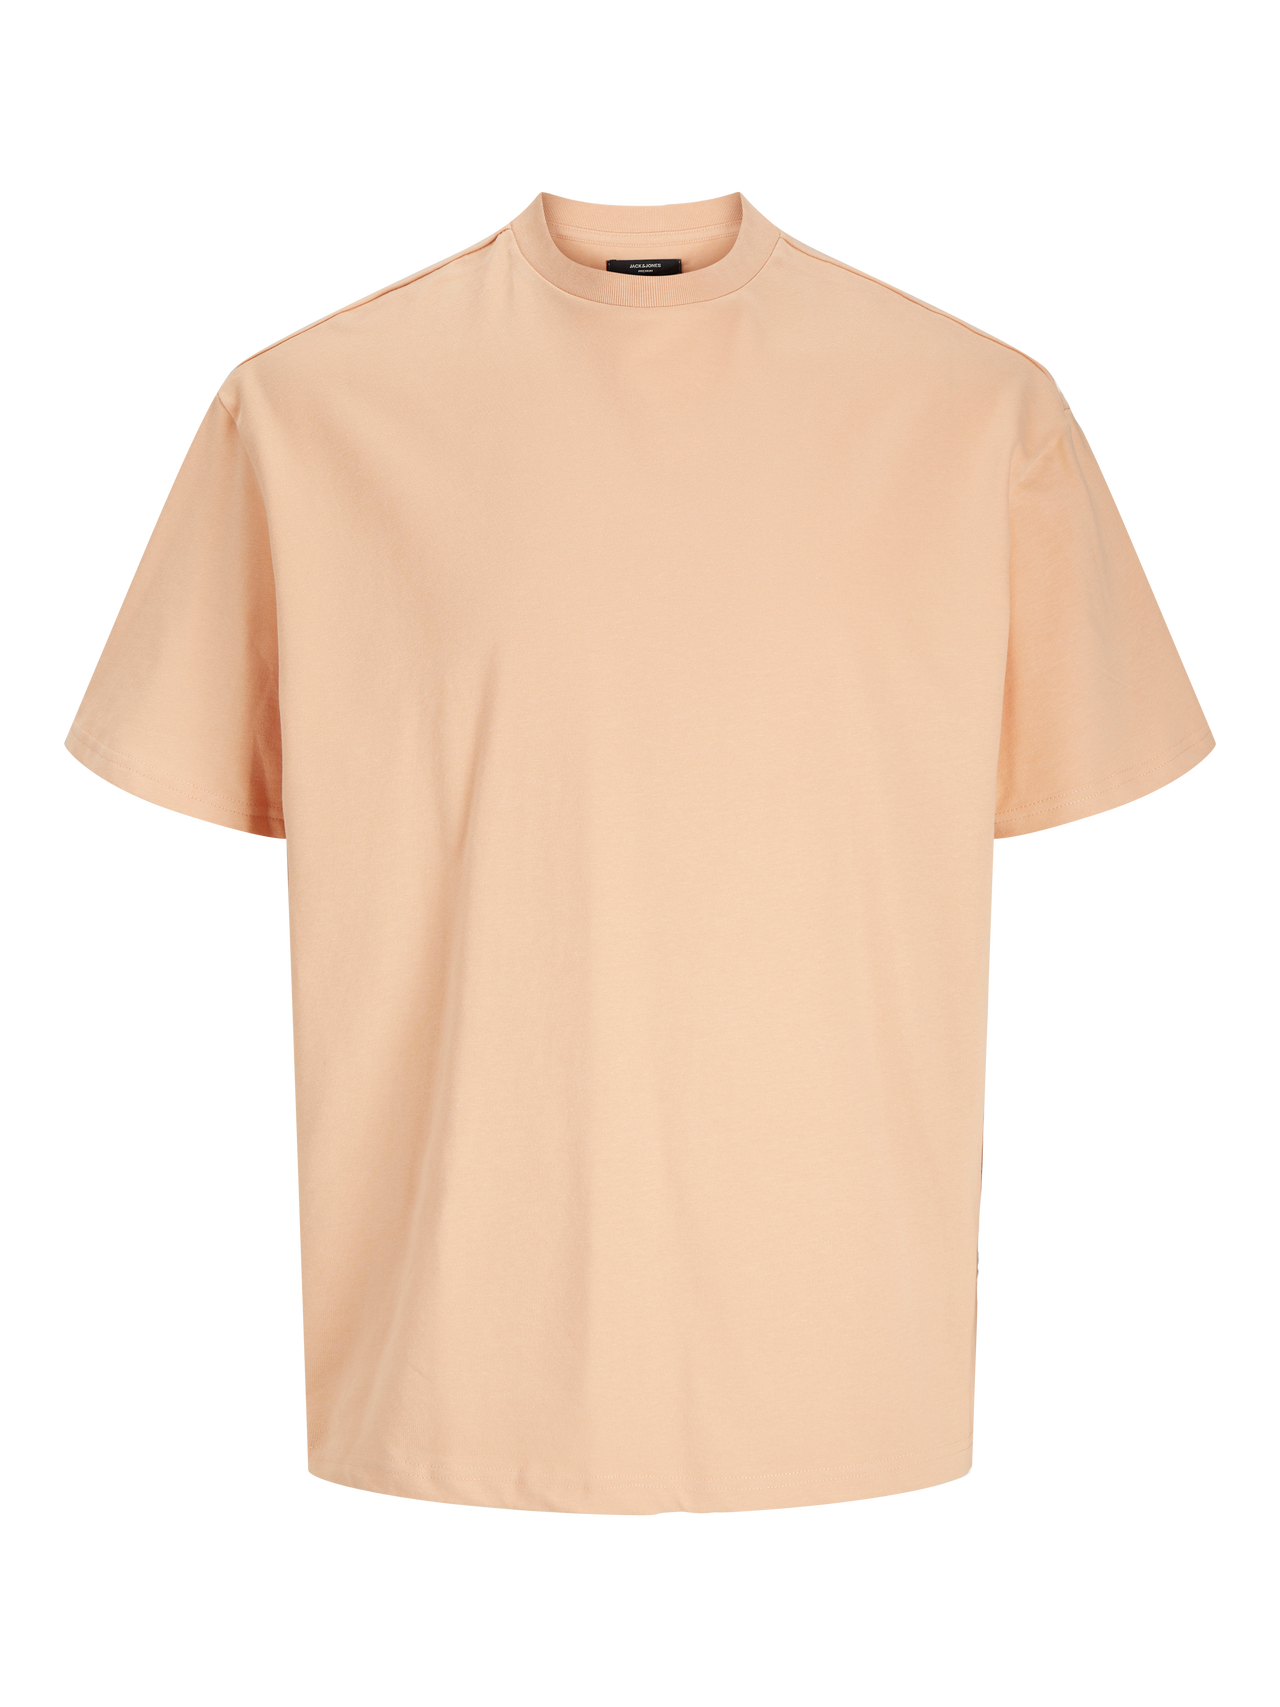 Jack & Jones Plain Crew neck T-shirt -Peach Nougat  - 12255176